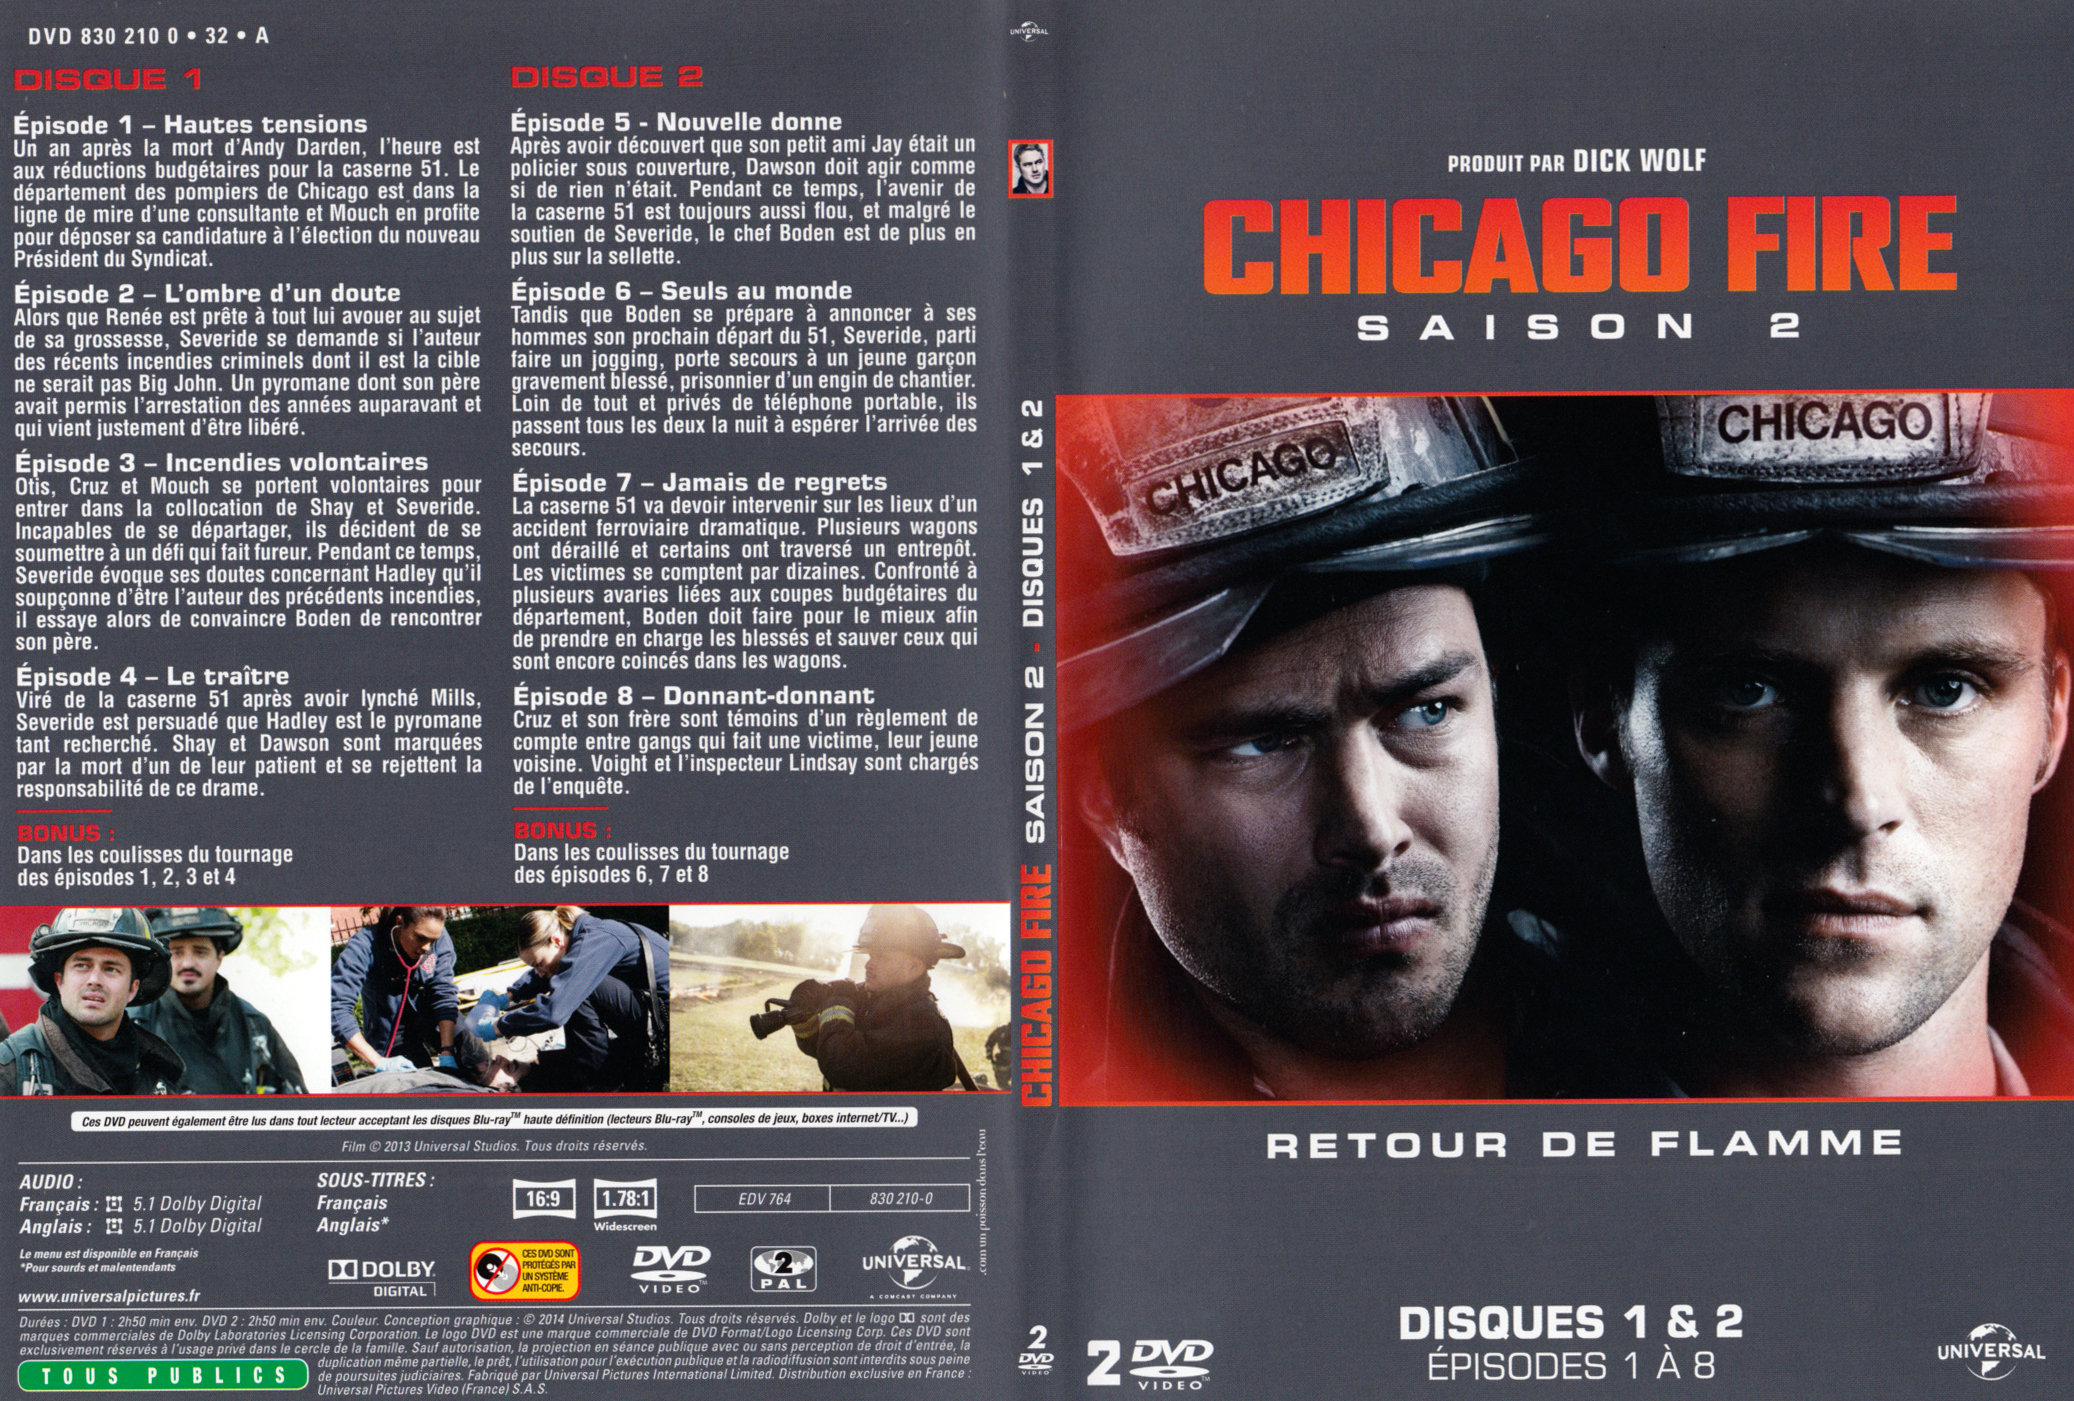 Jaquette DVD Chicago Fire Saison 2 DVD 1